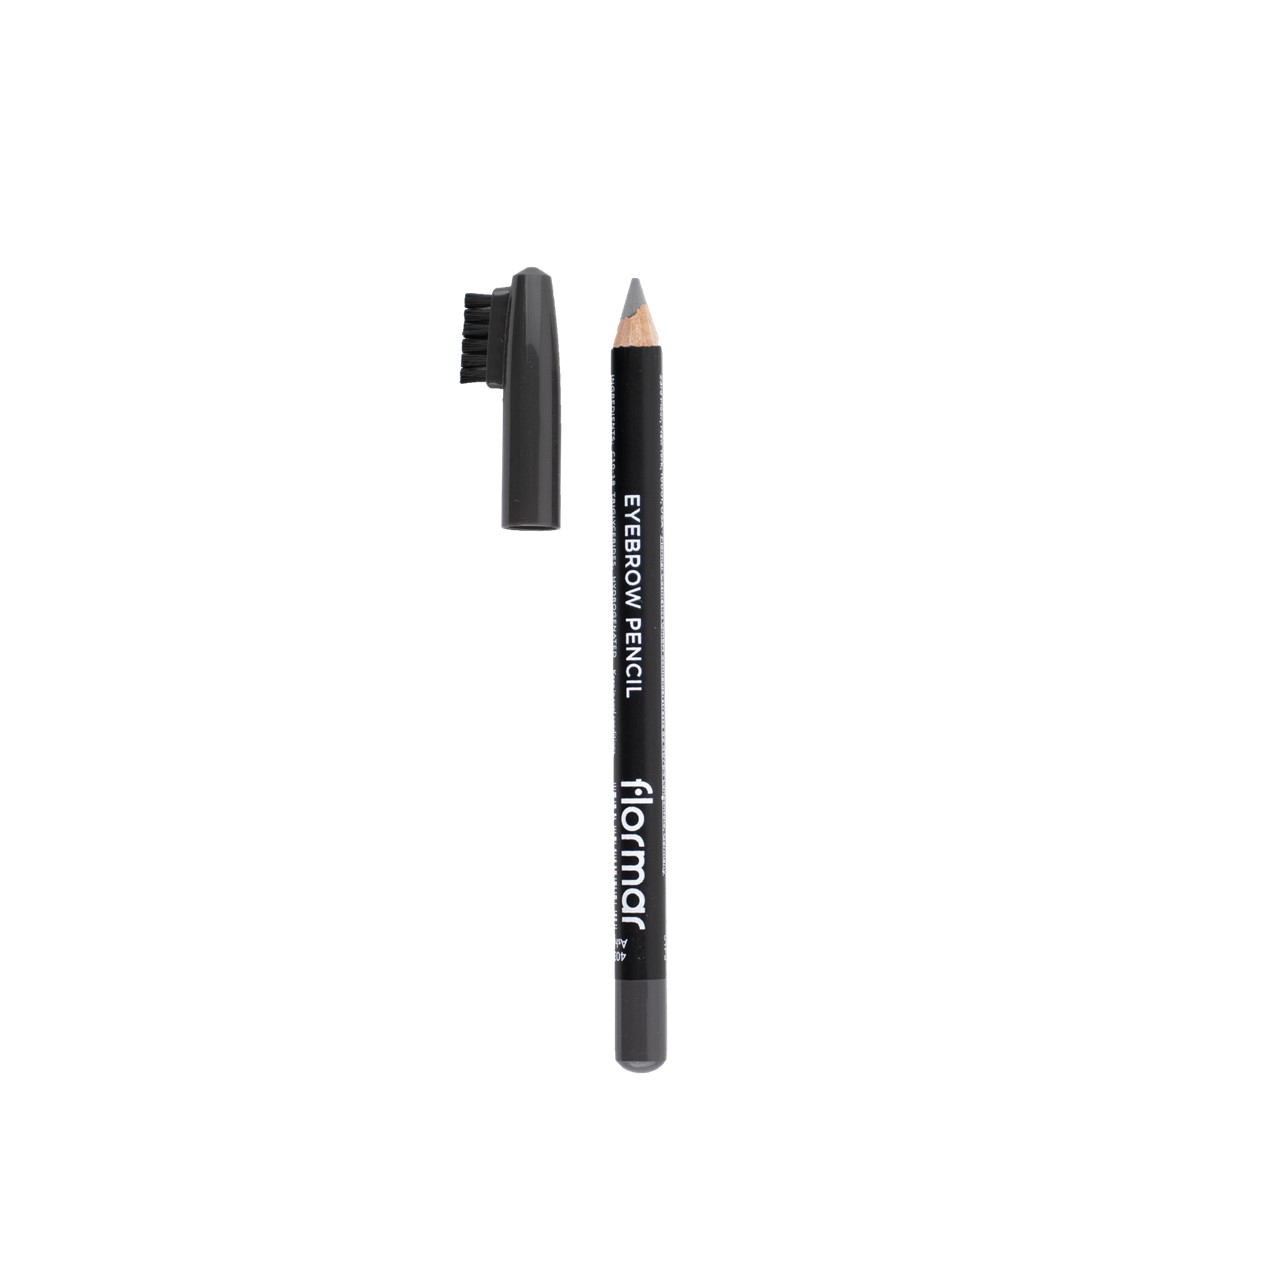 Flormar Eyebrow Pencil 403 Ashy 0.35g